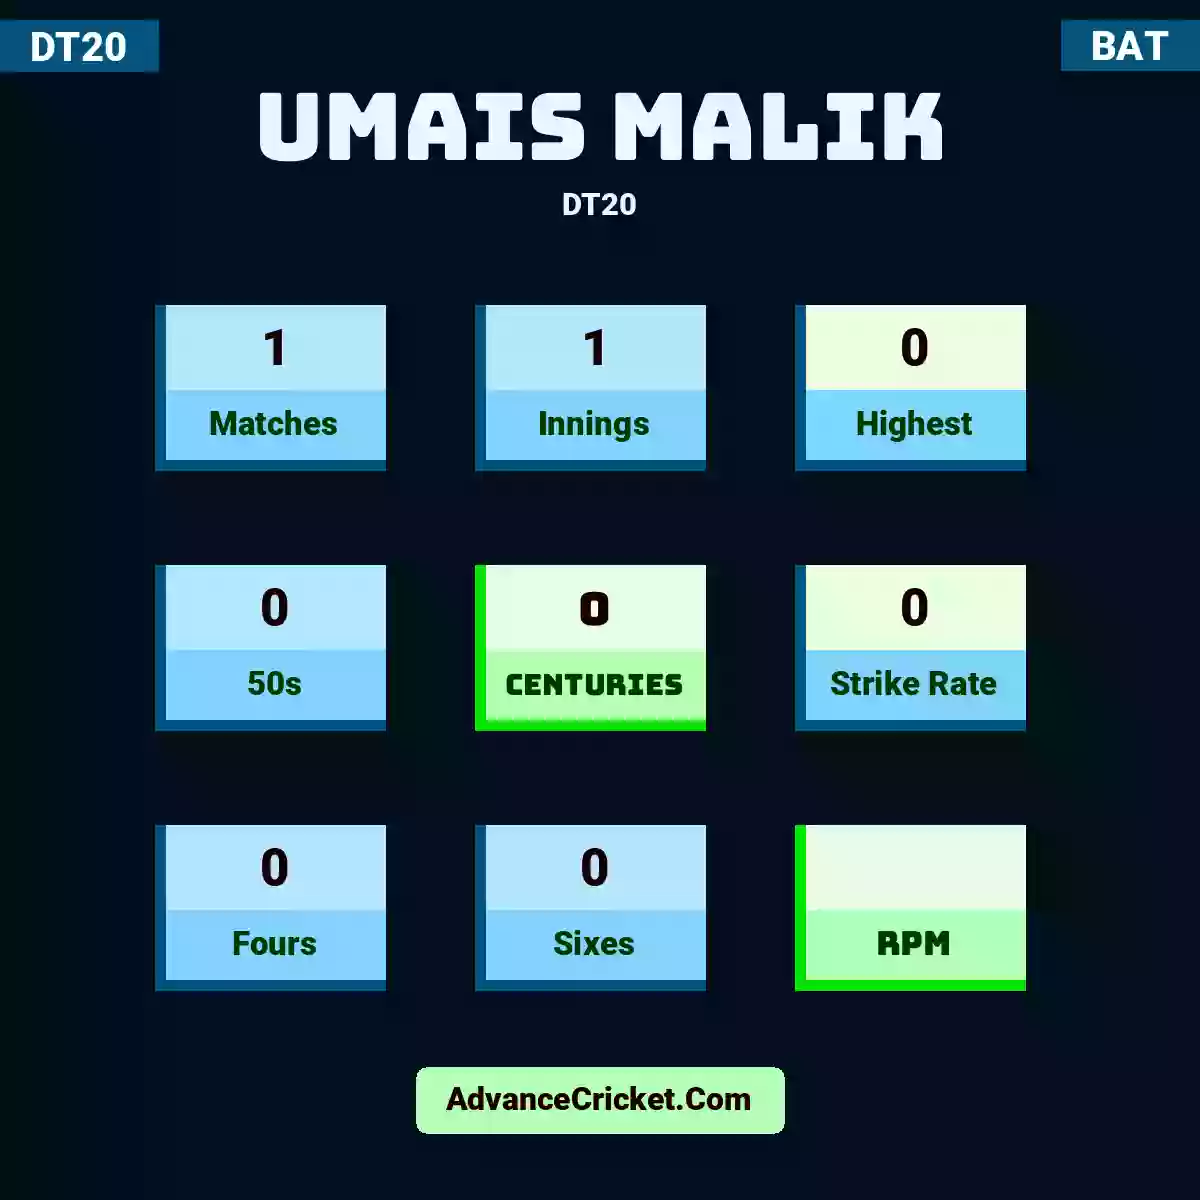 Umais Malik DT20 , Umais Malik played 1 matches, scored 0 runs as highest, 0 half-centuries, and 0 centuries, with a strike rate of 0. U.Malik hit 0 fours and 0 sixes.